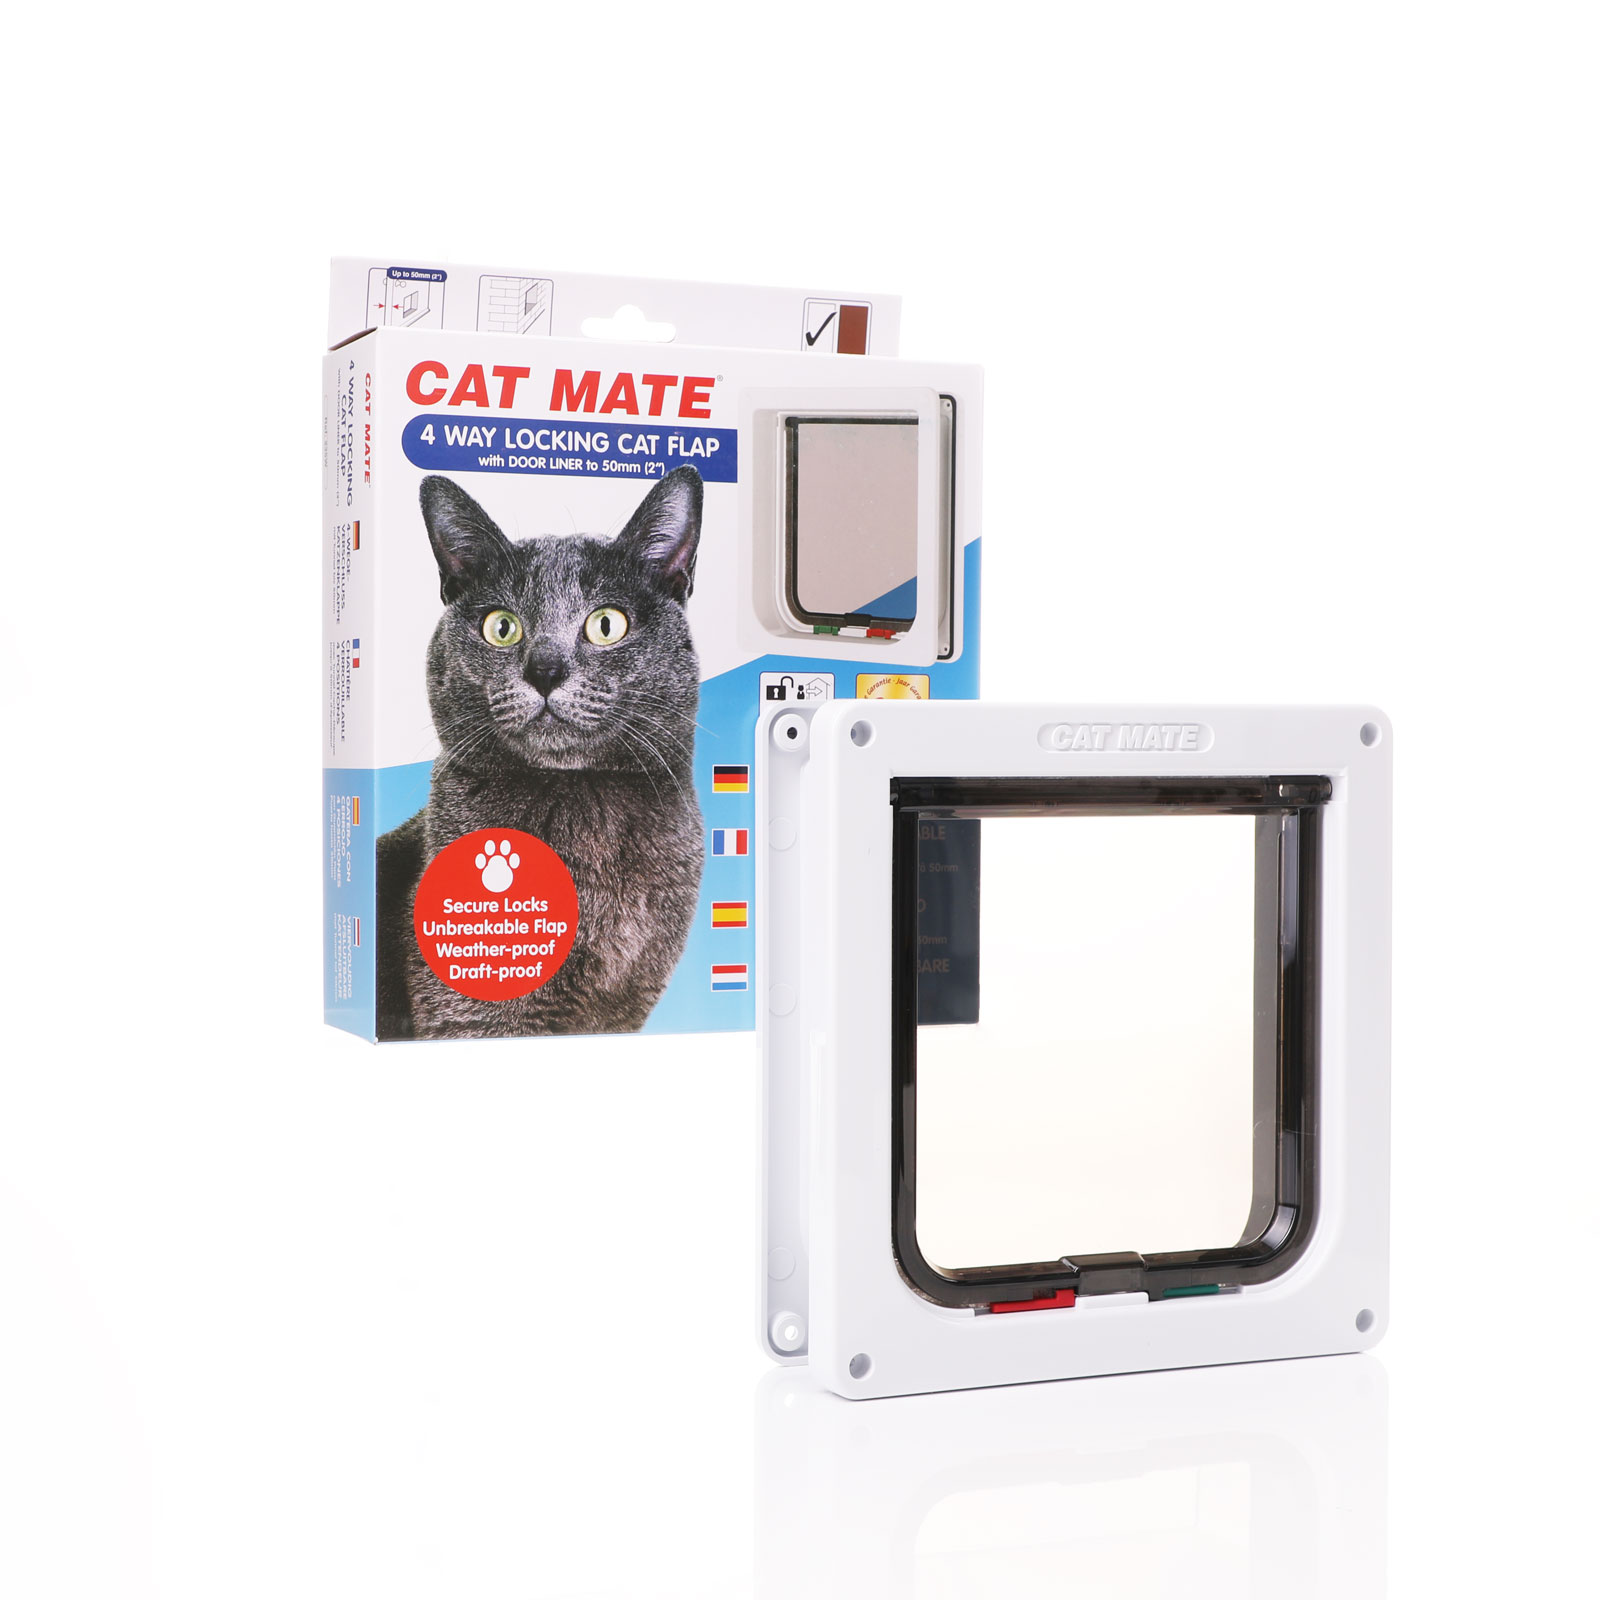 Cat mate 235w White - 4 Way Locking Cat Flap